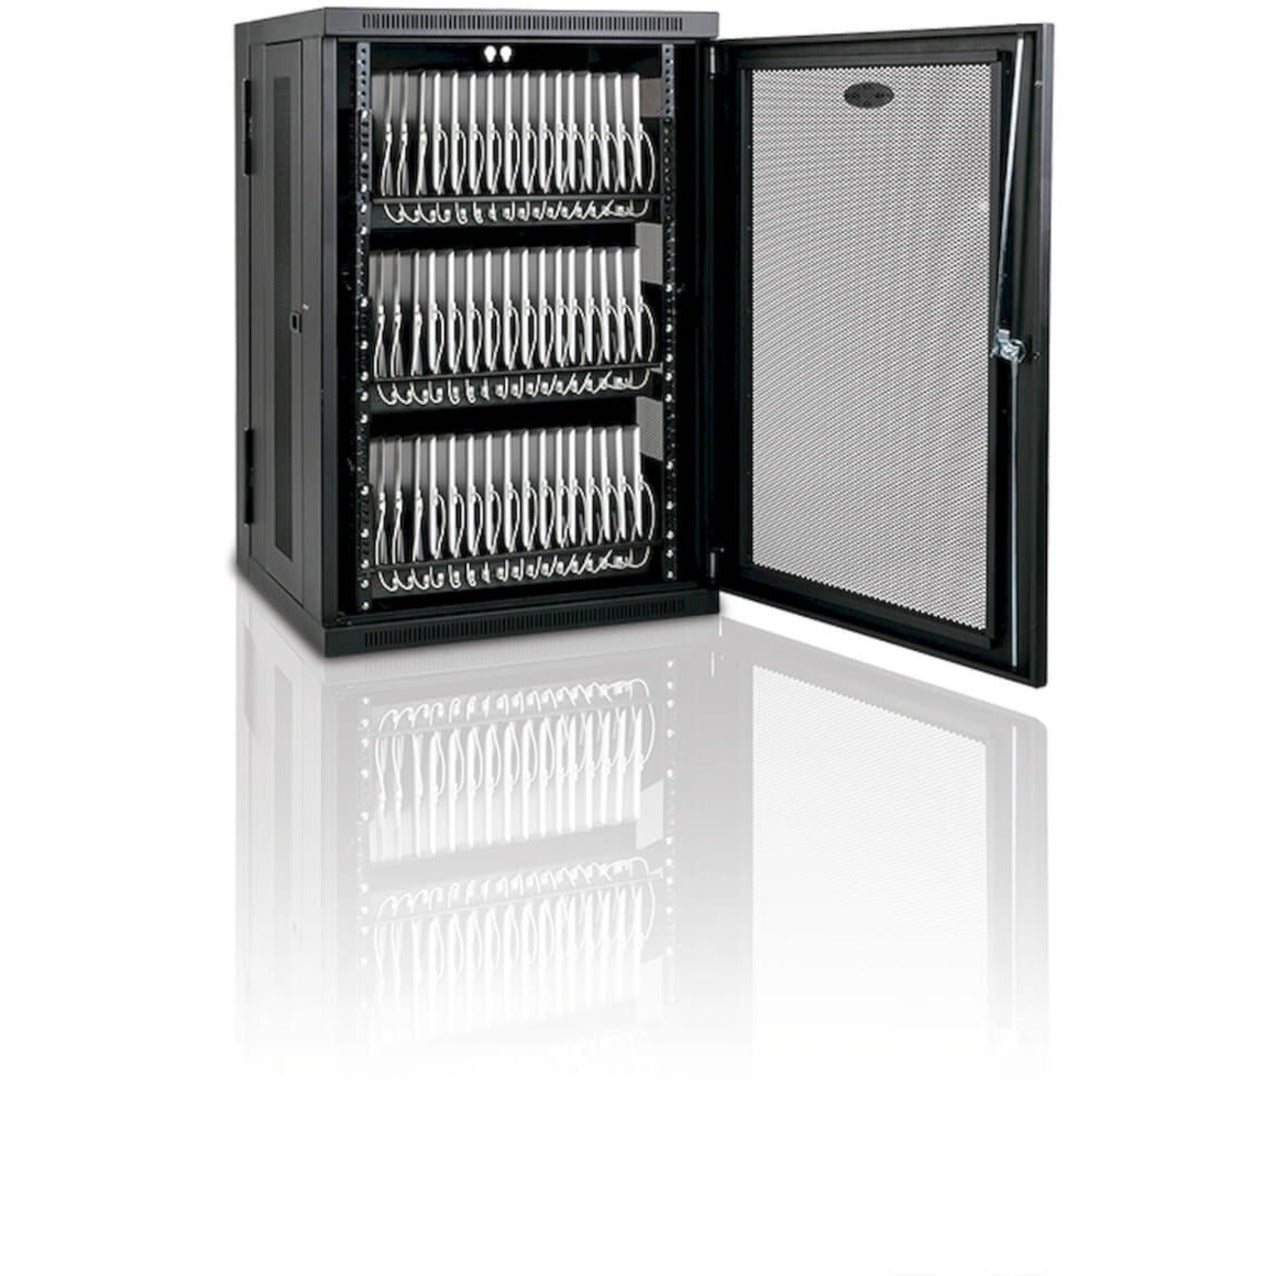 Tripp Lite CS48USB 48-Port USB Tablet Charging Station, Black, Locking Door, Flow-through Ventilation